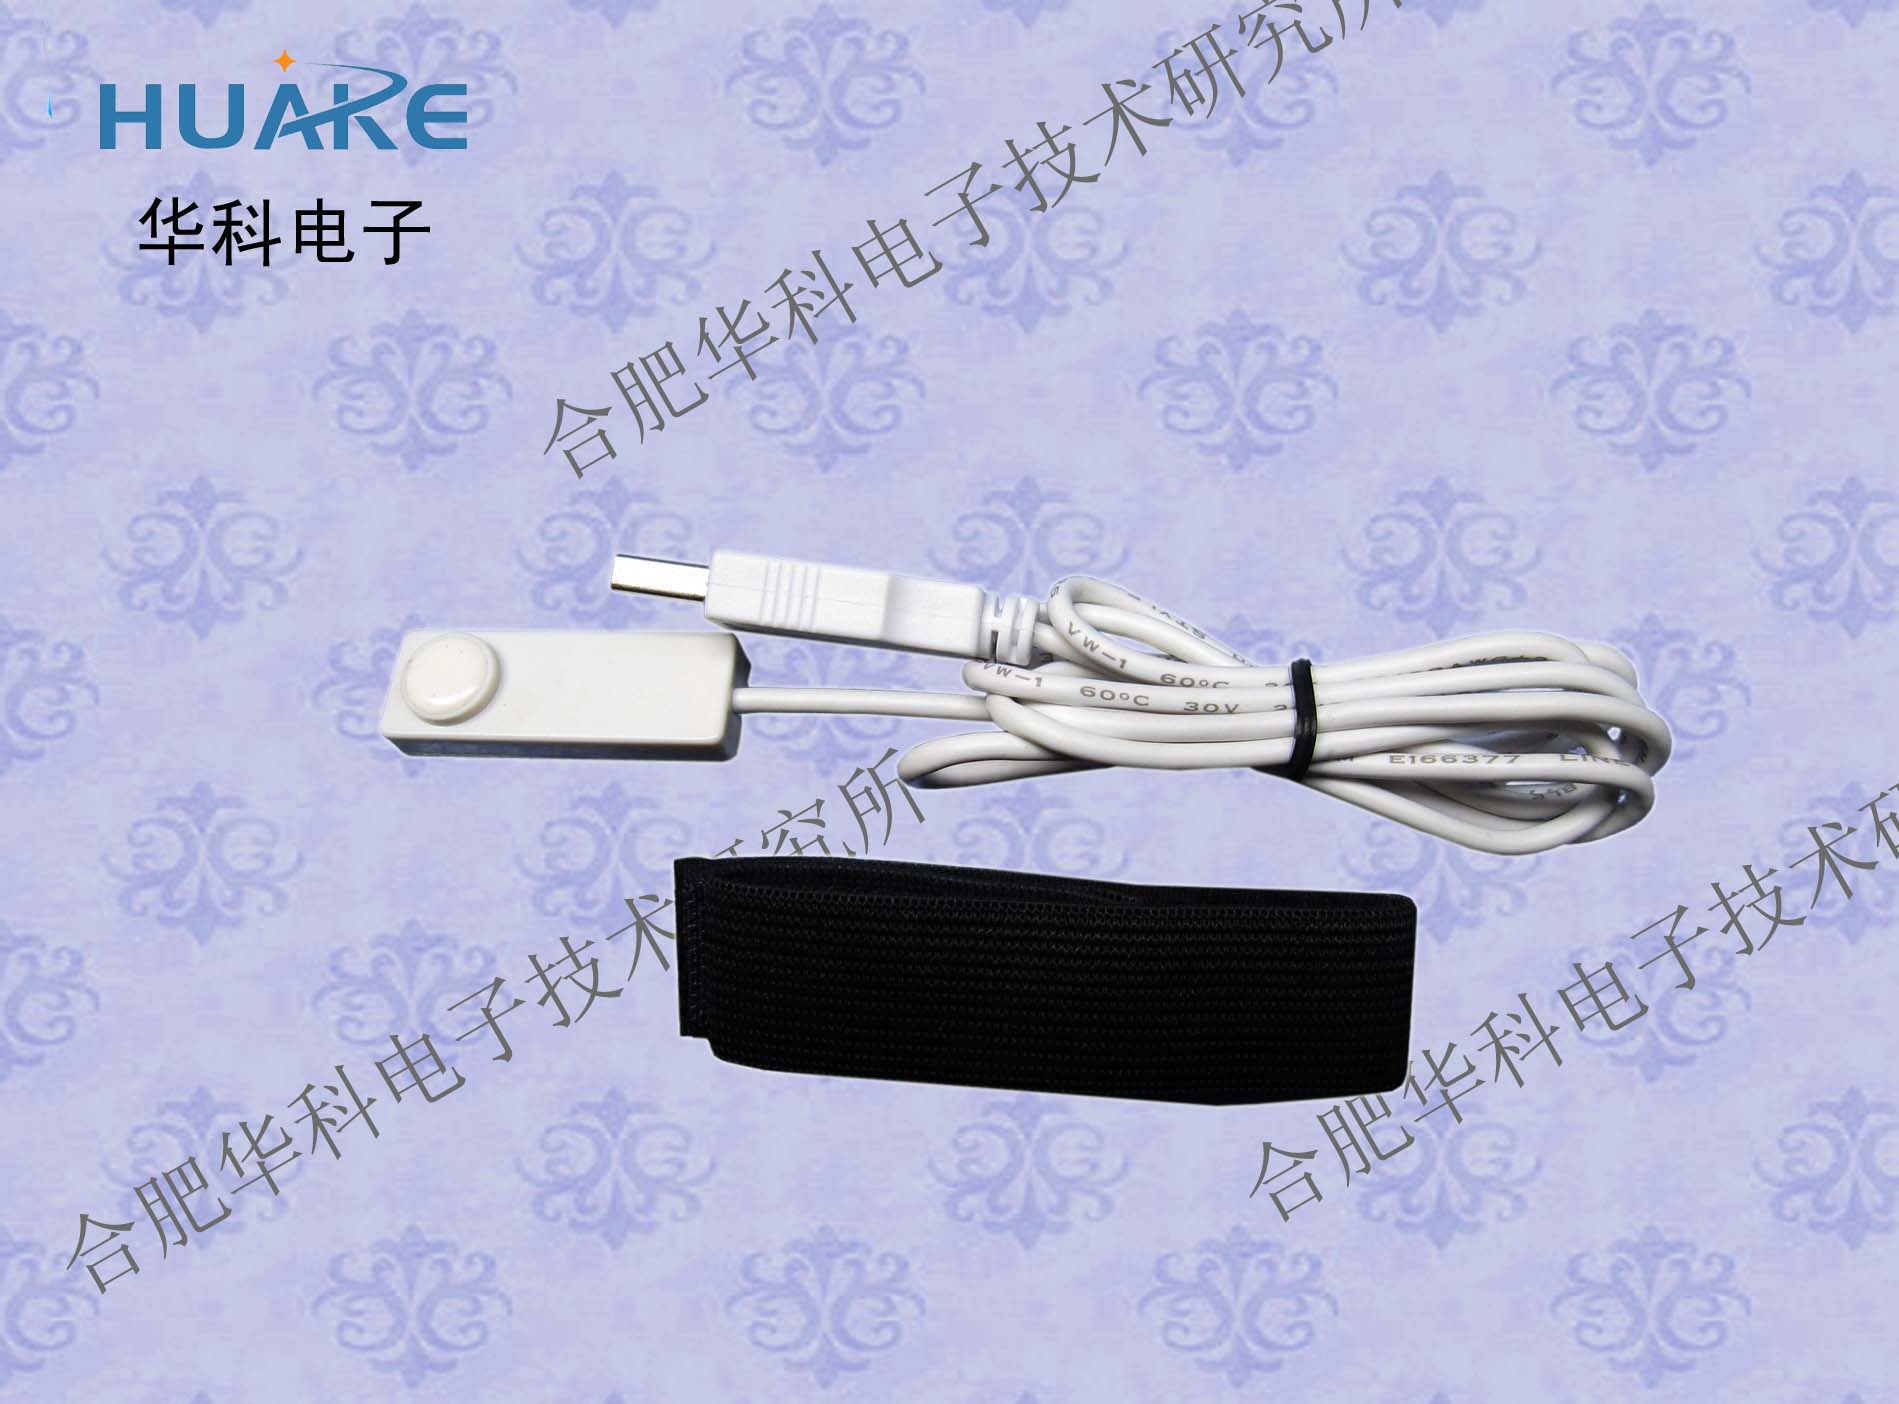 HK-2000H 脉搏传感器/脉搏波传感器/USB脉搏传感器/厂家直销